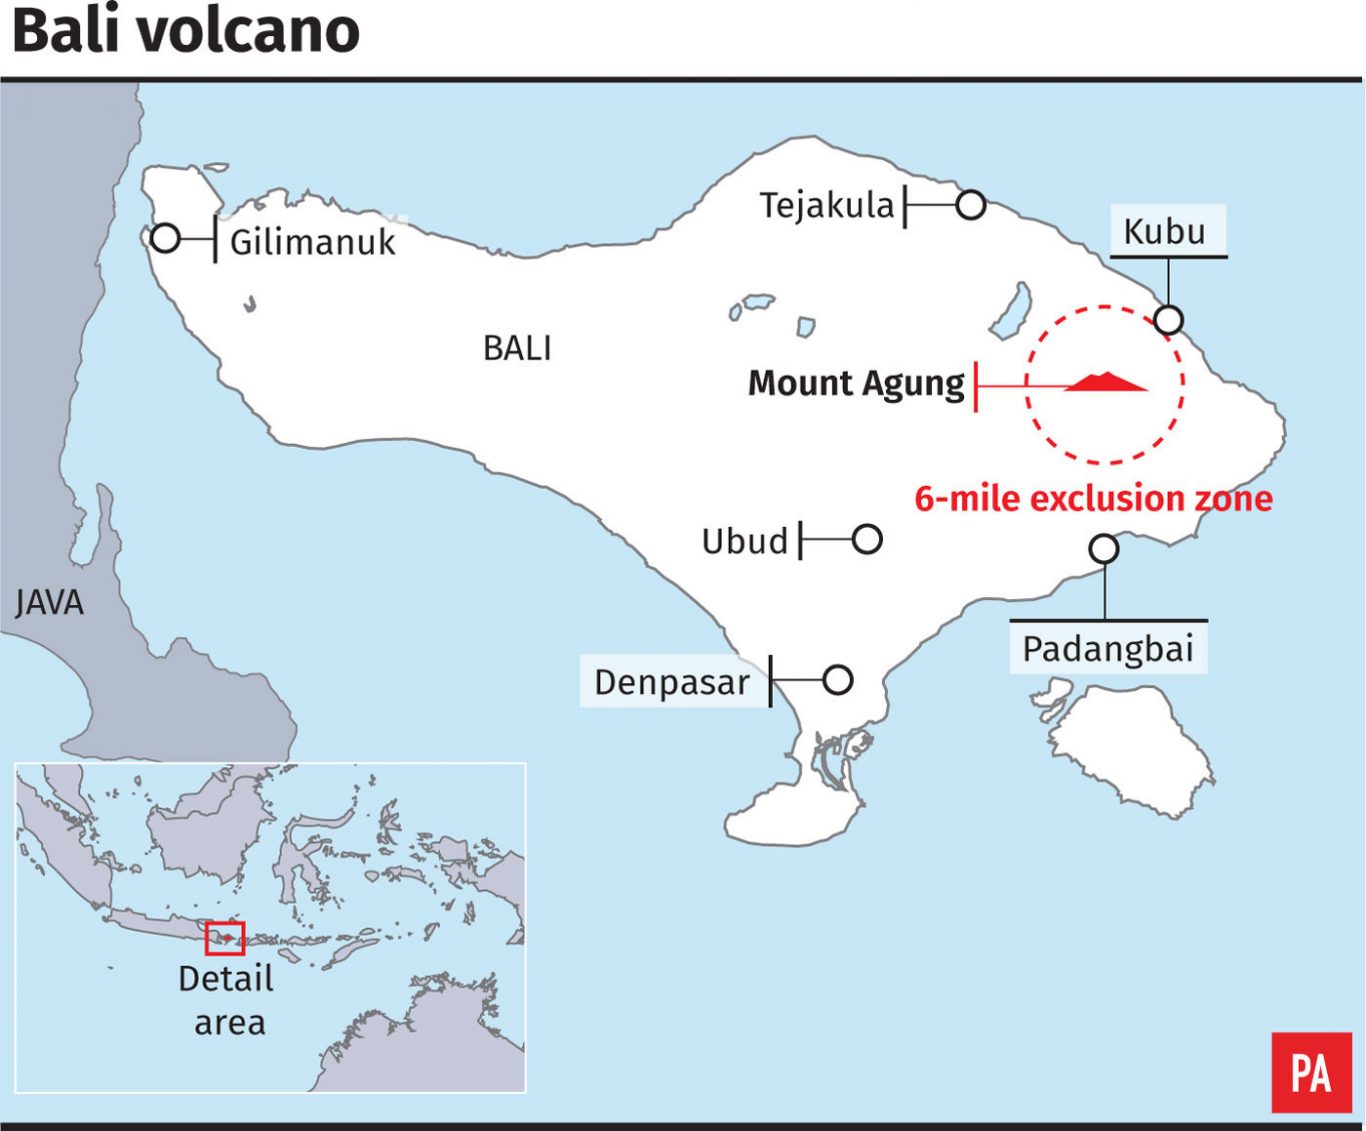 Graphic locates Mount Agung on Bali